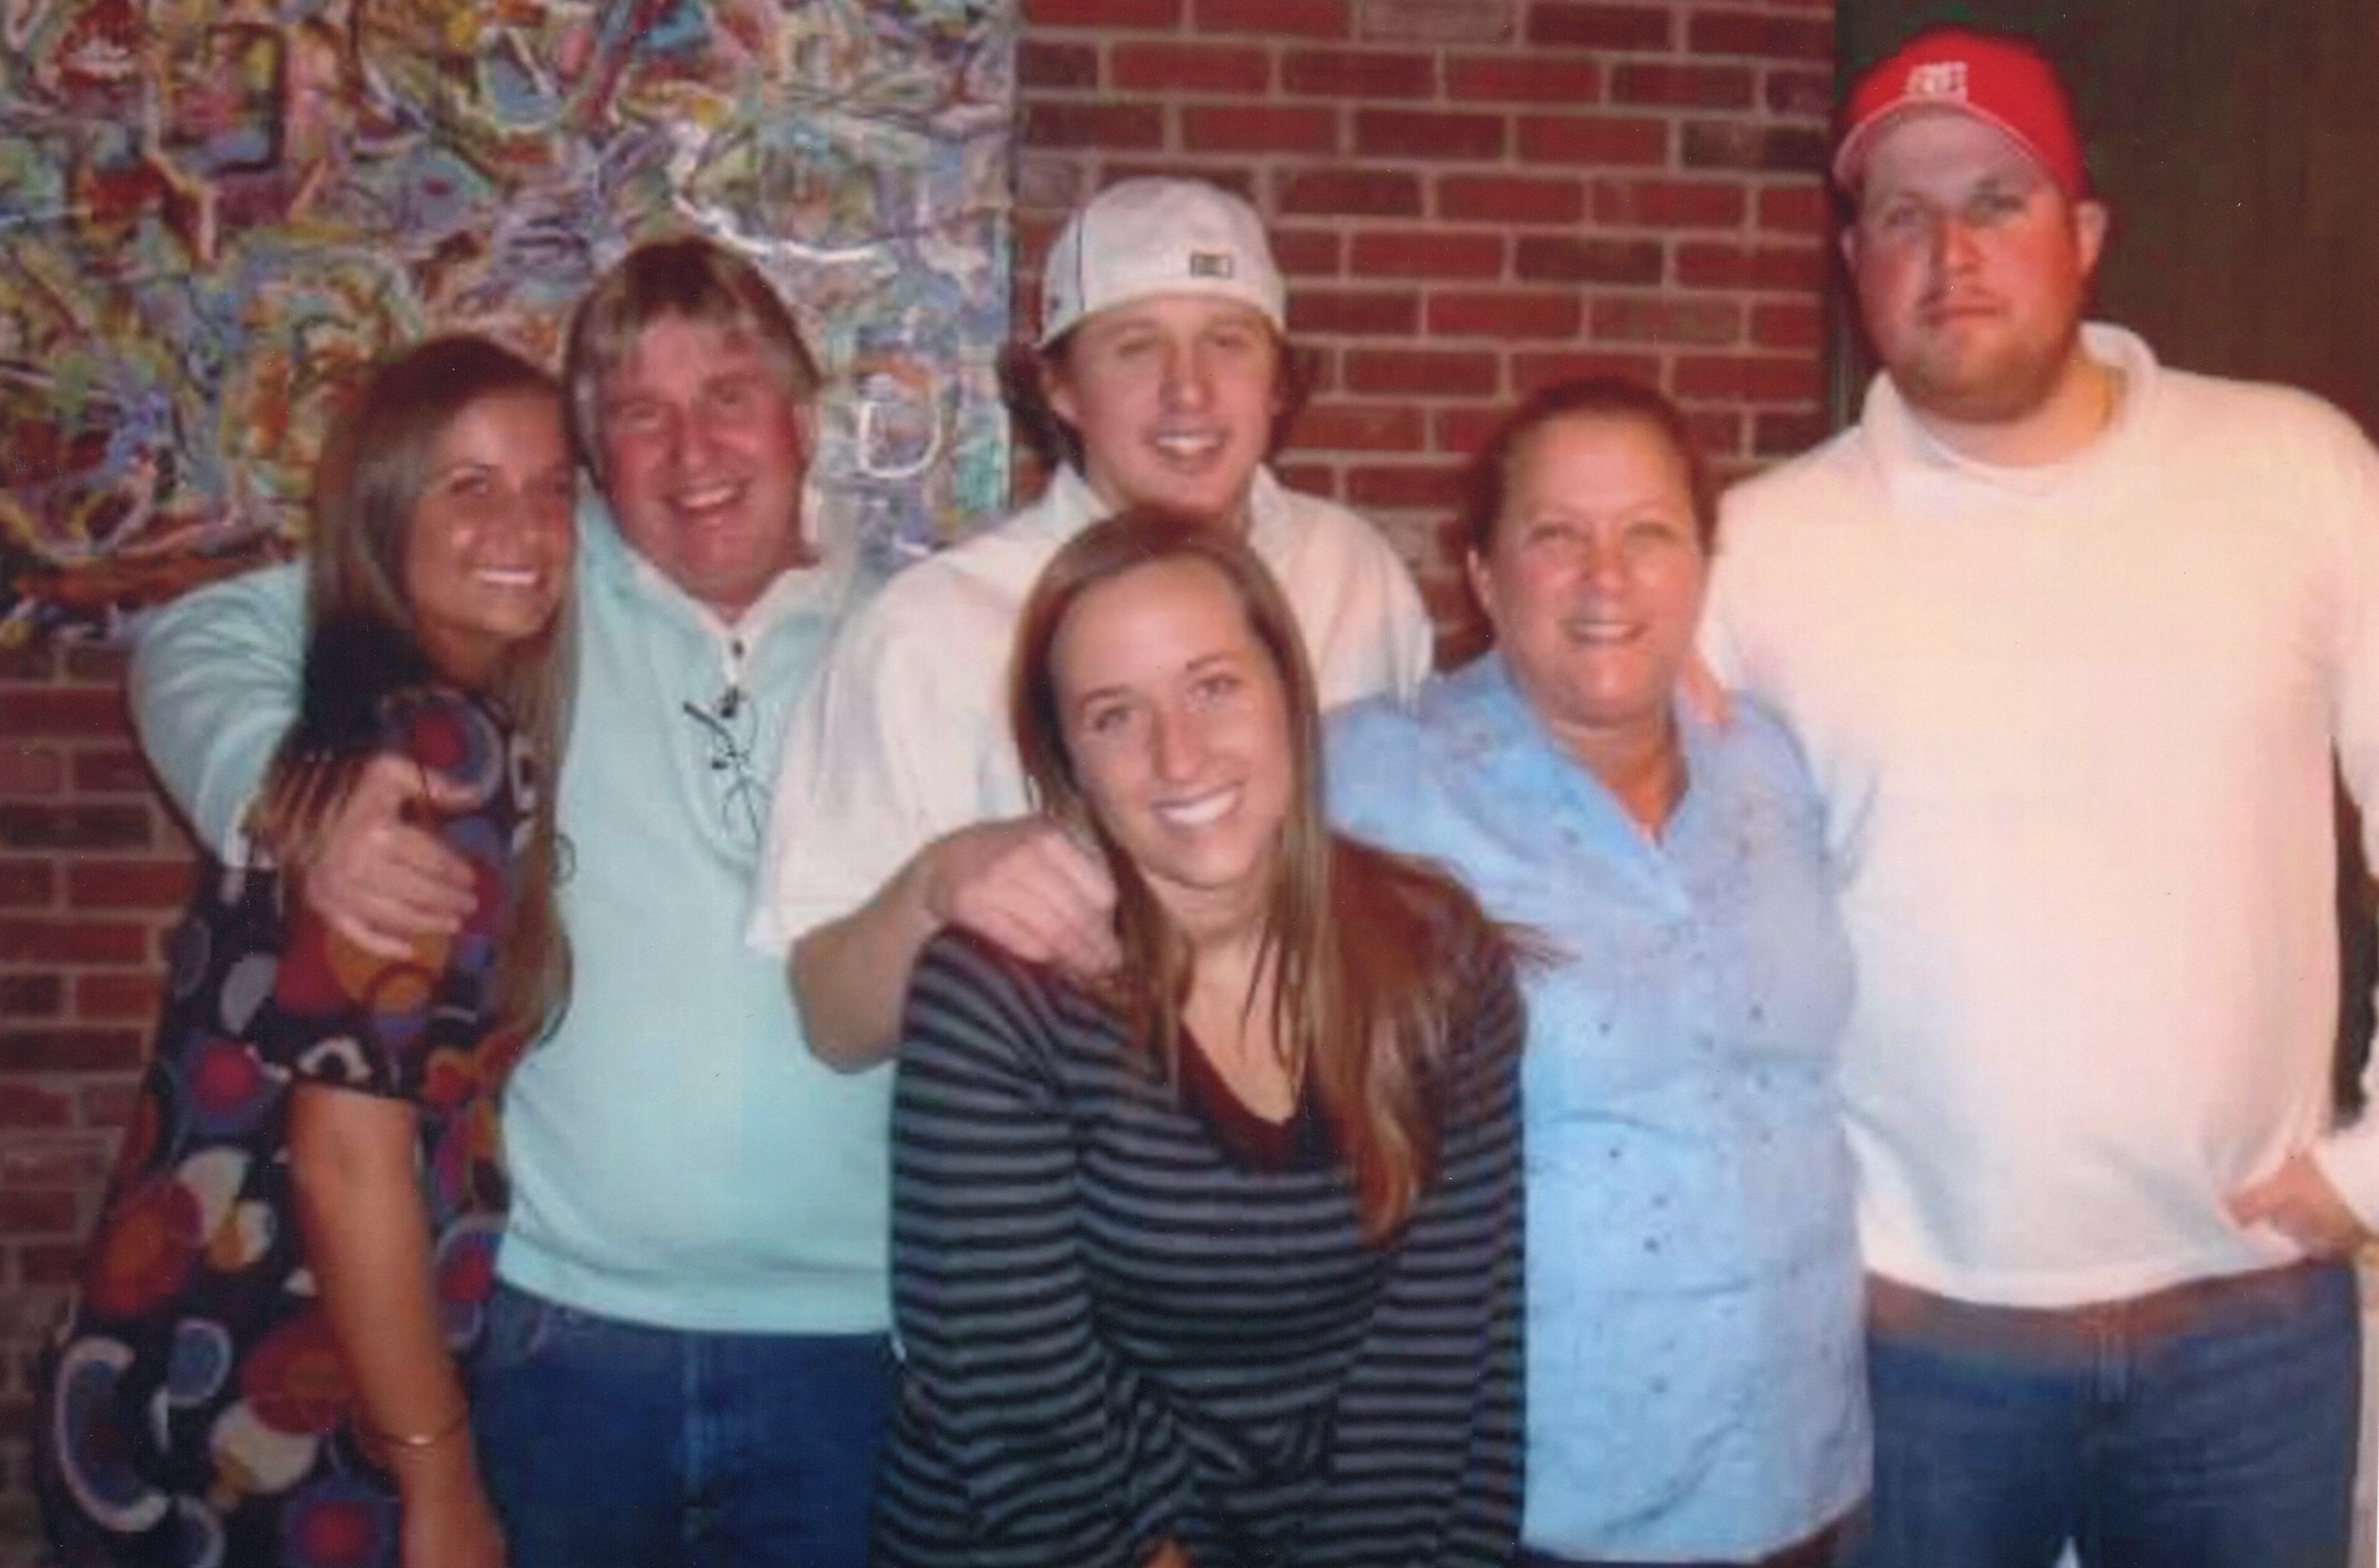 Family photo (from left): Alice, John, Kelly, Paul, Lisa, and John Michael